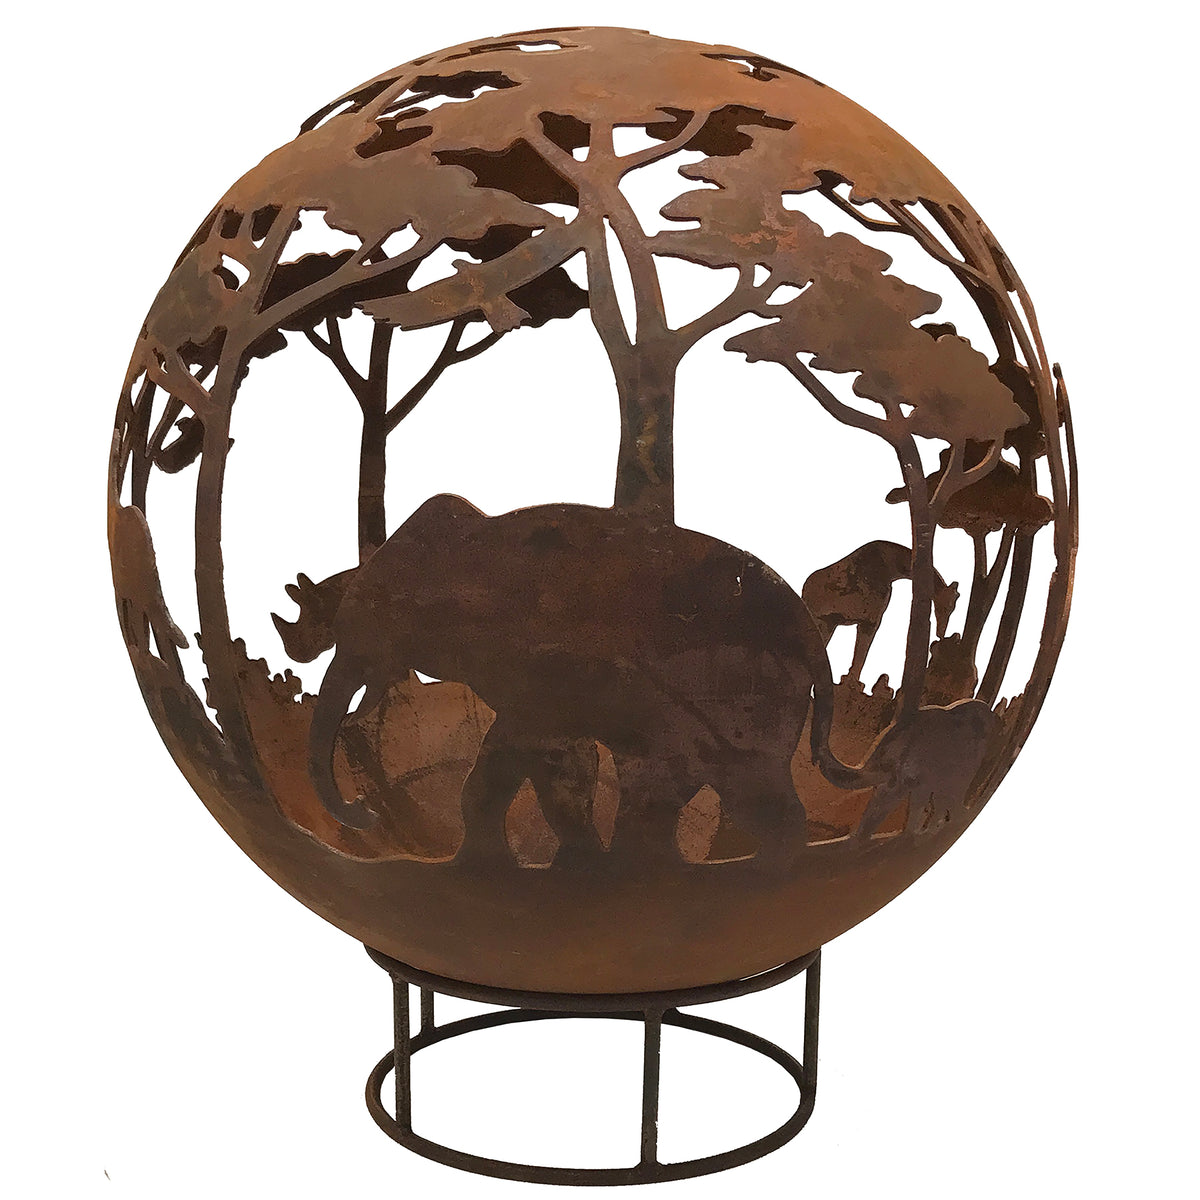 Garden Fire Ball 70cm Safari Design with Rust Finish